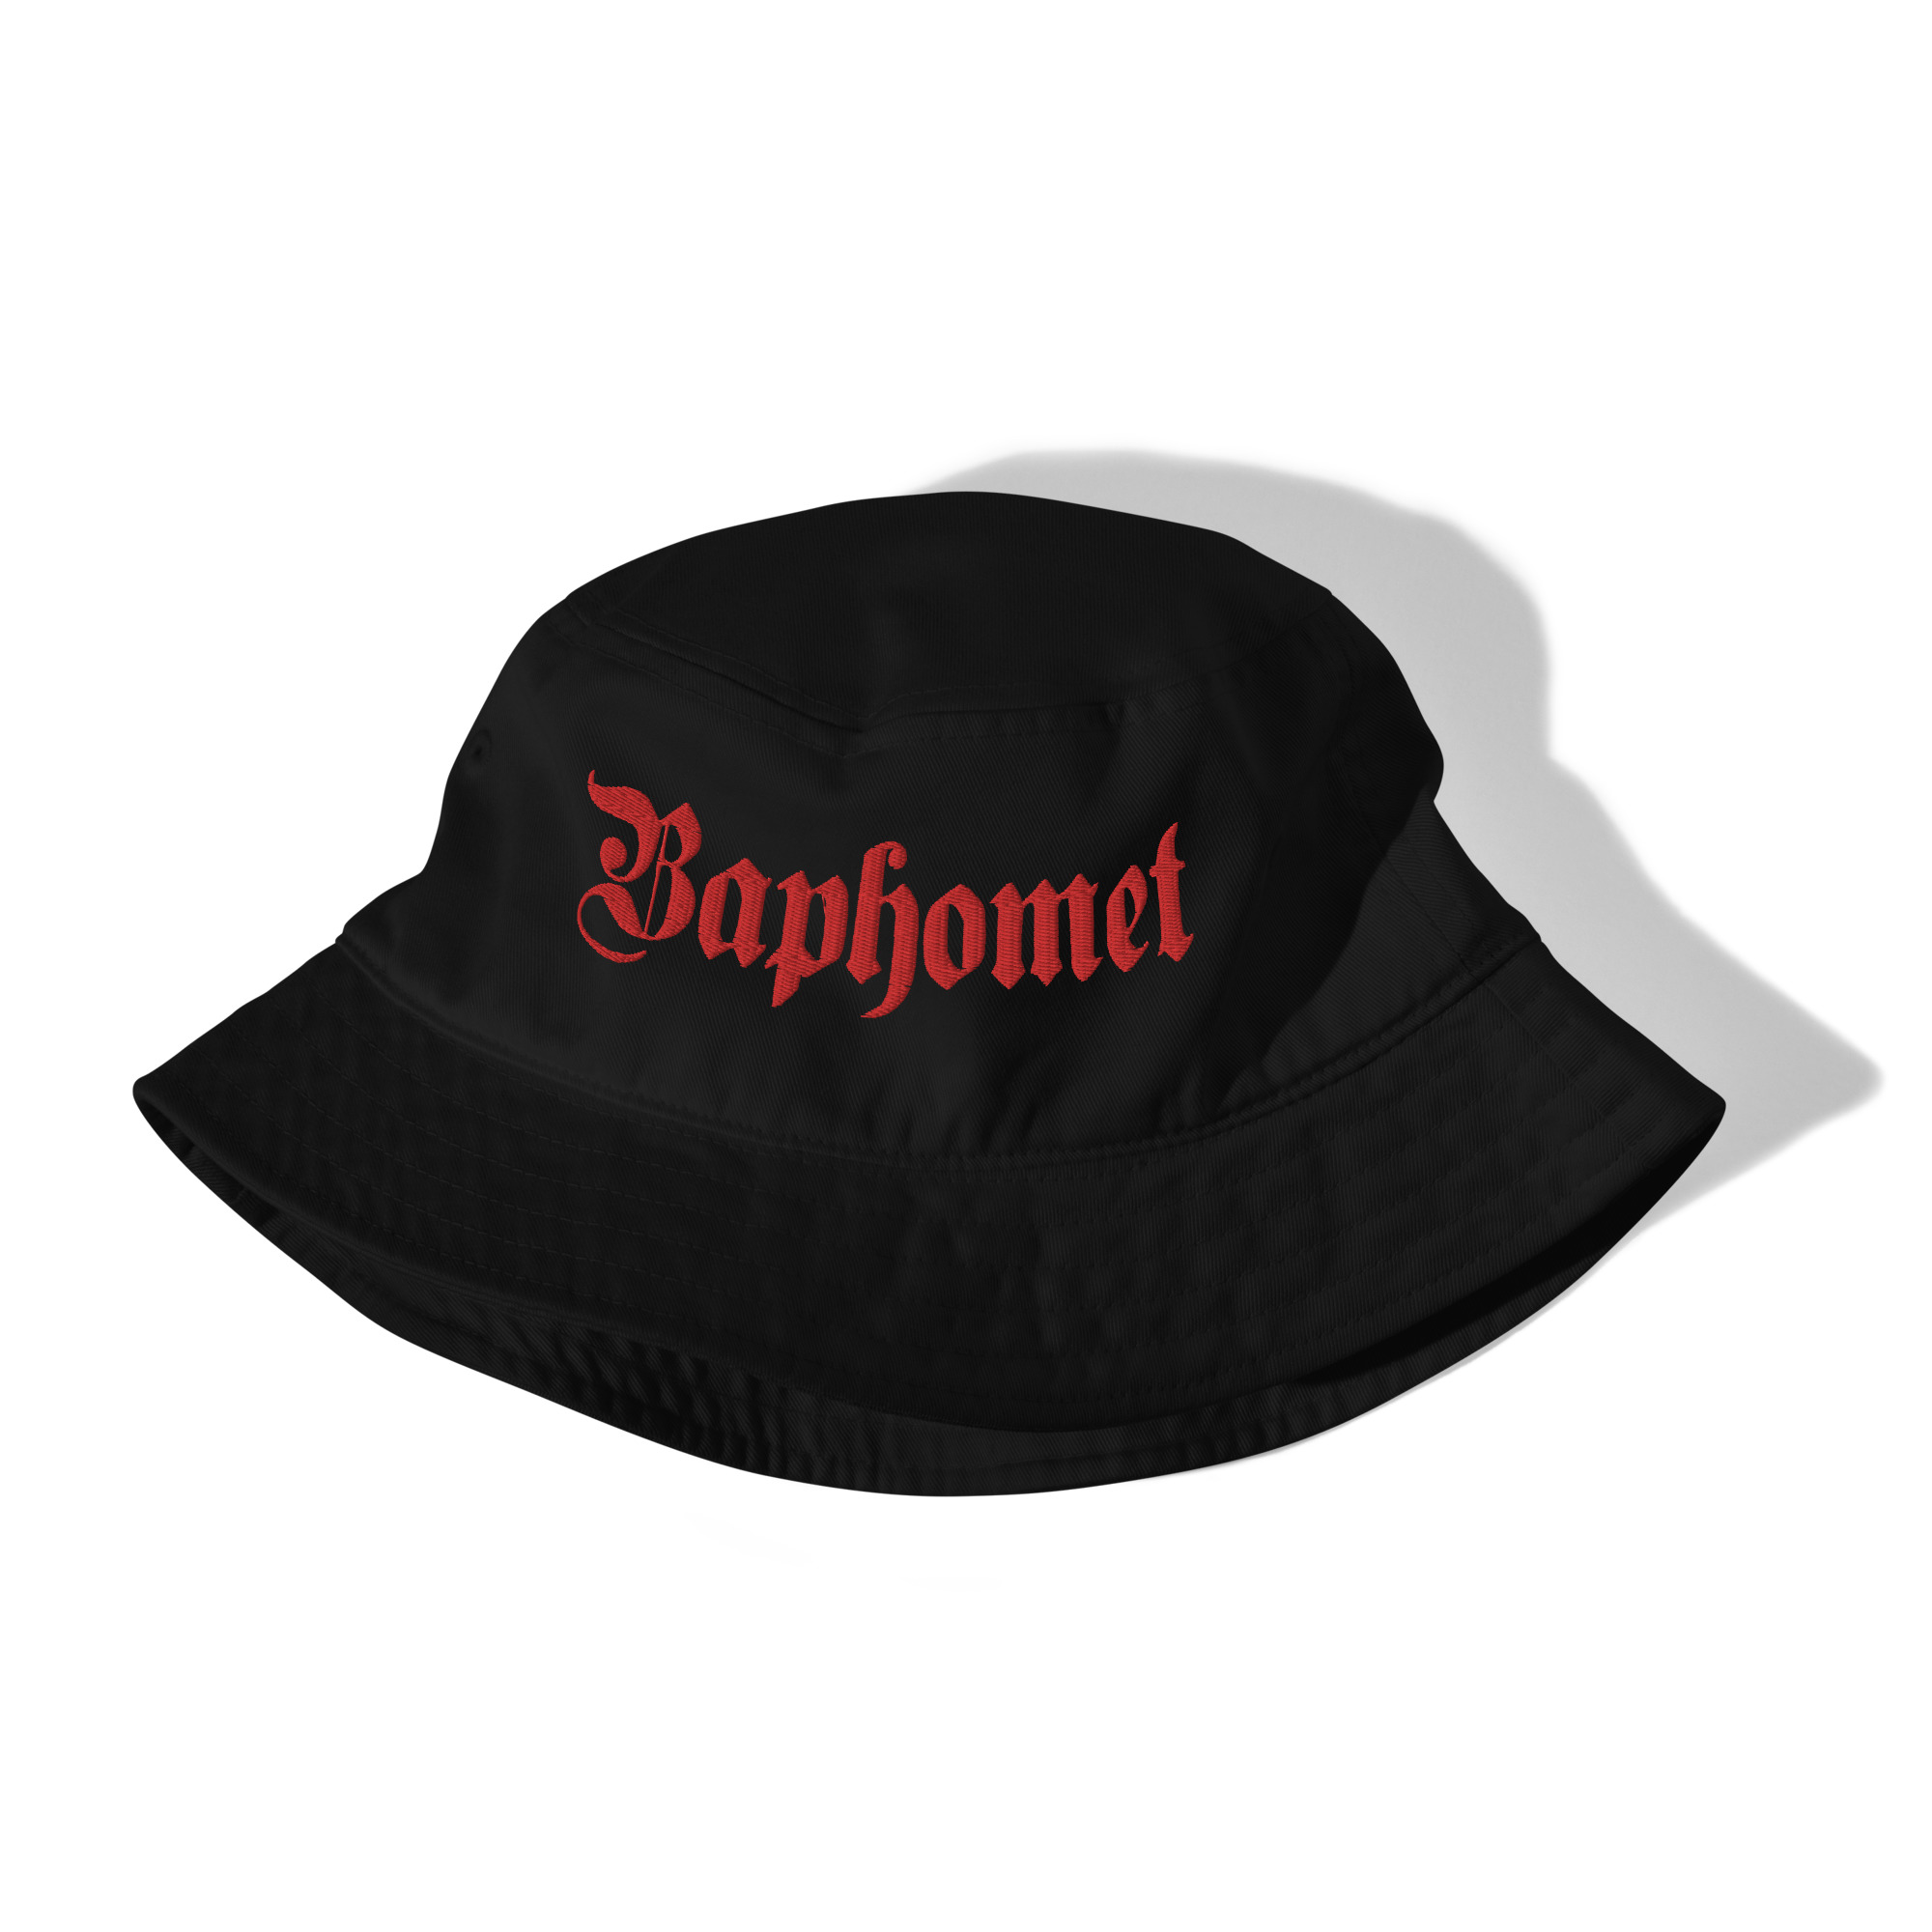 Featured image for “Baphomet - Organic bucket hat”